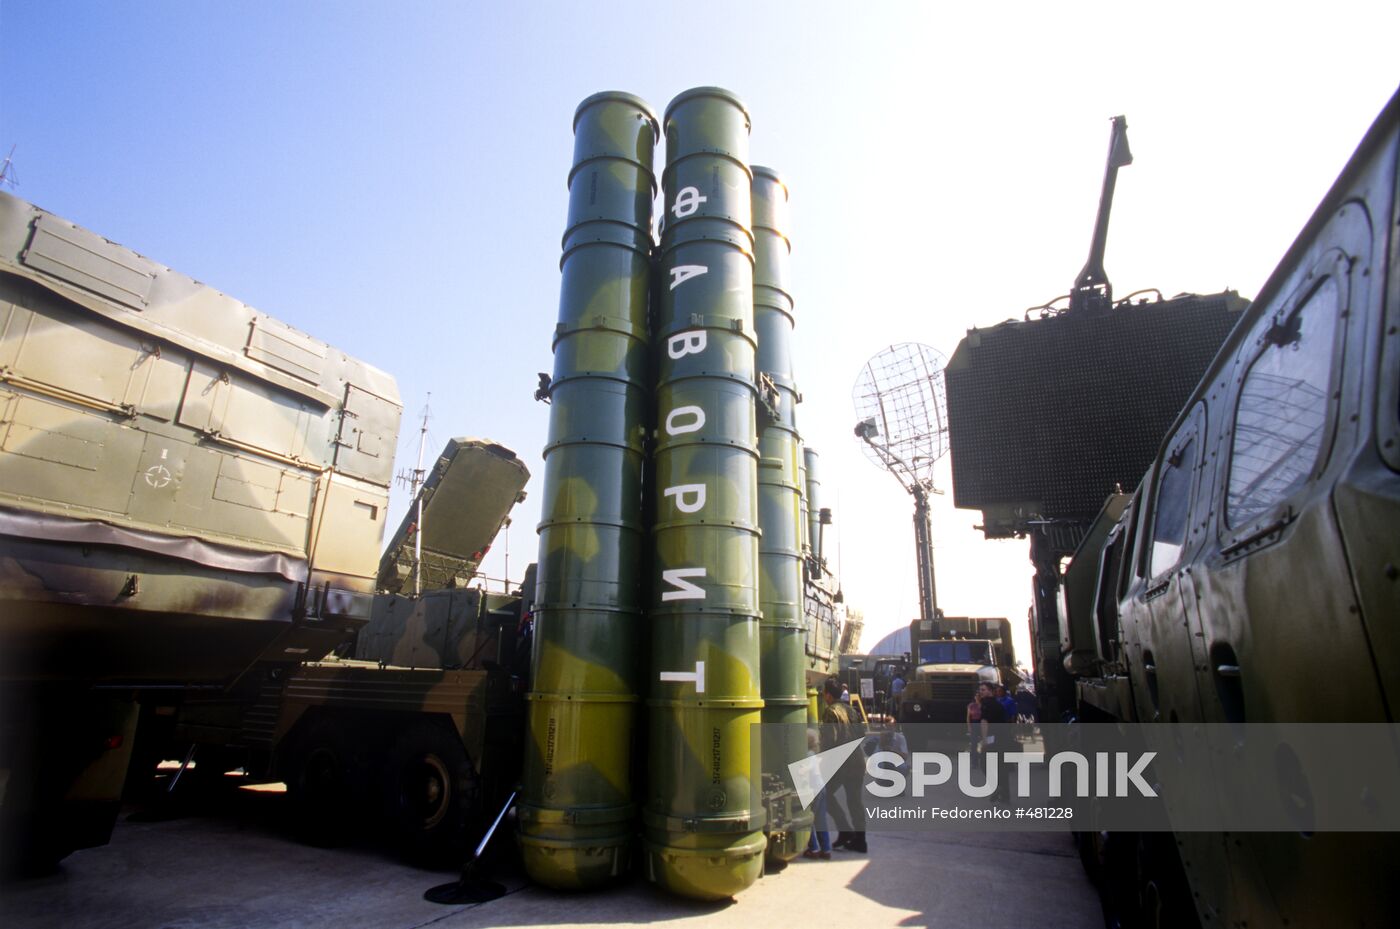 S-300 Favorit air defense missile system